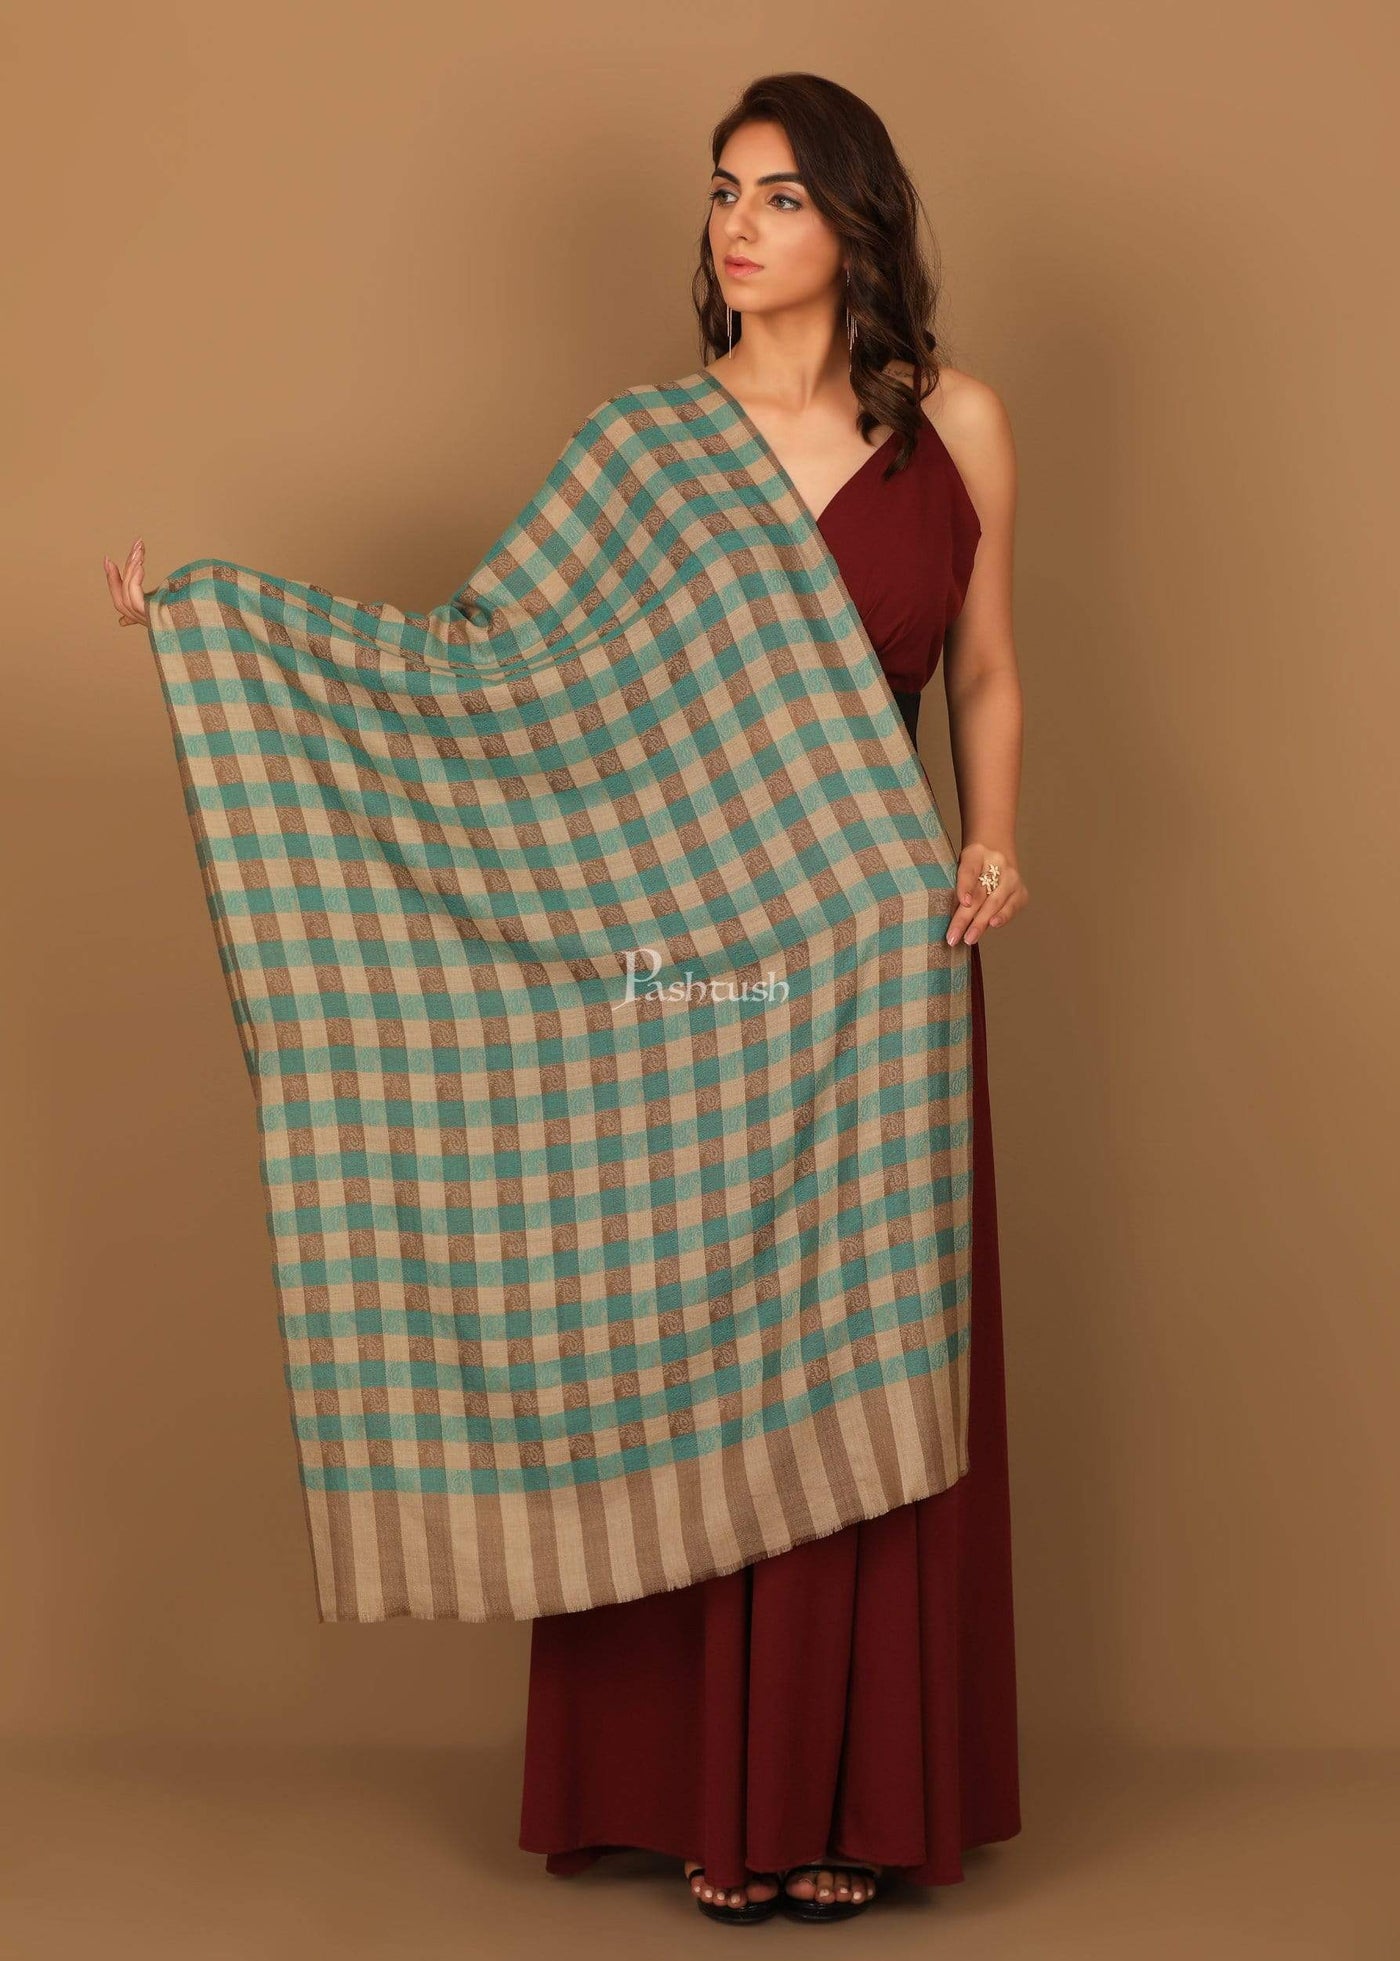 Pashtush India Stole Pashtush Womens Luxury Wool Check Scarf,  Reversible, Extra-Fine, Arabic Blue and Beige